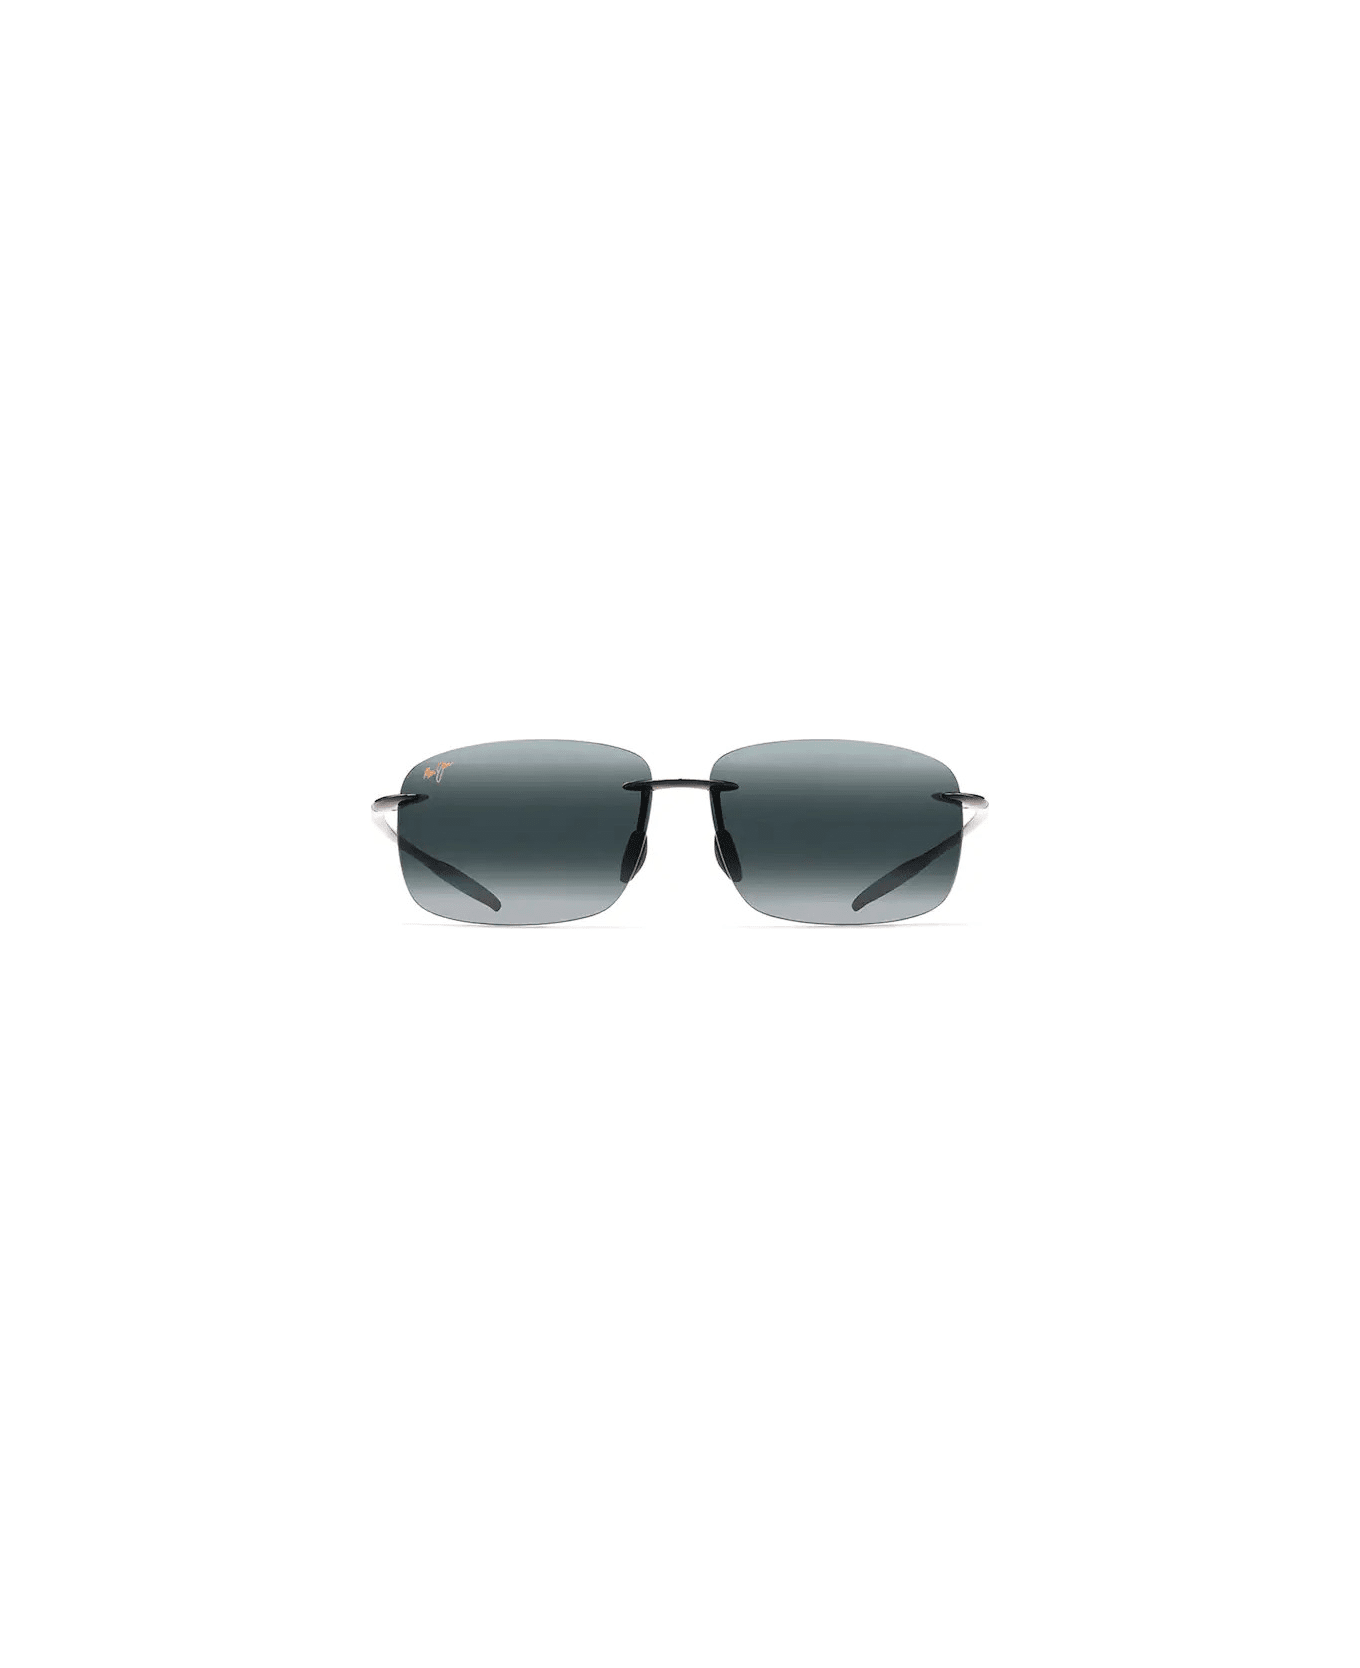 Maui Jim 422 02 Sunglasses - Grigio